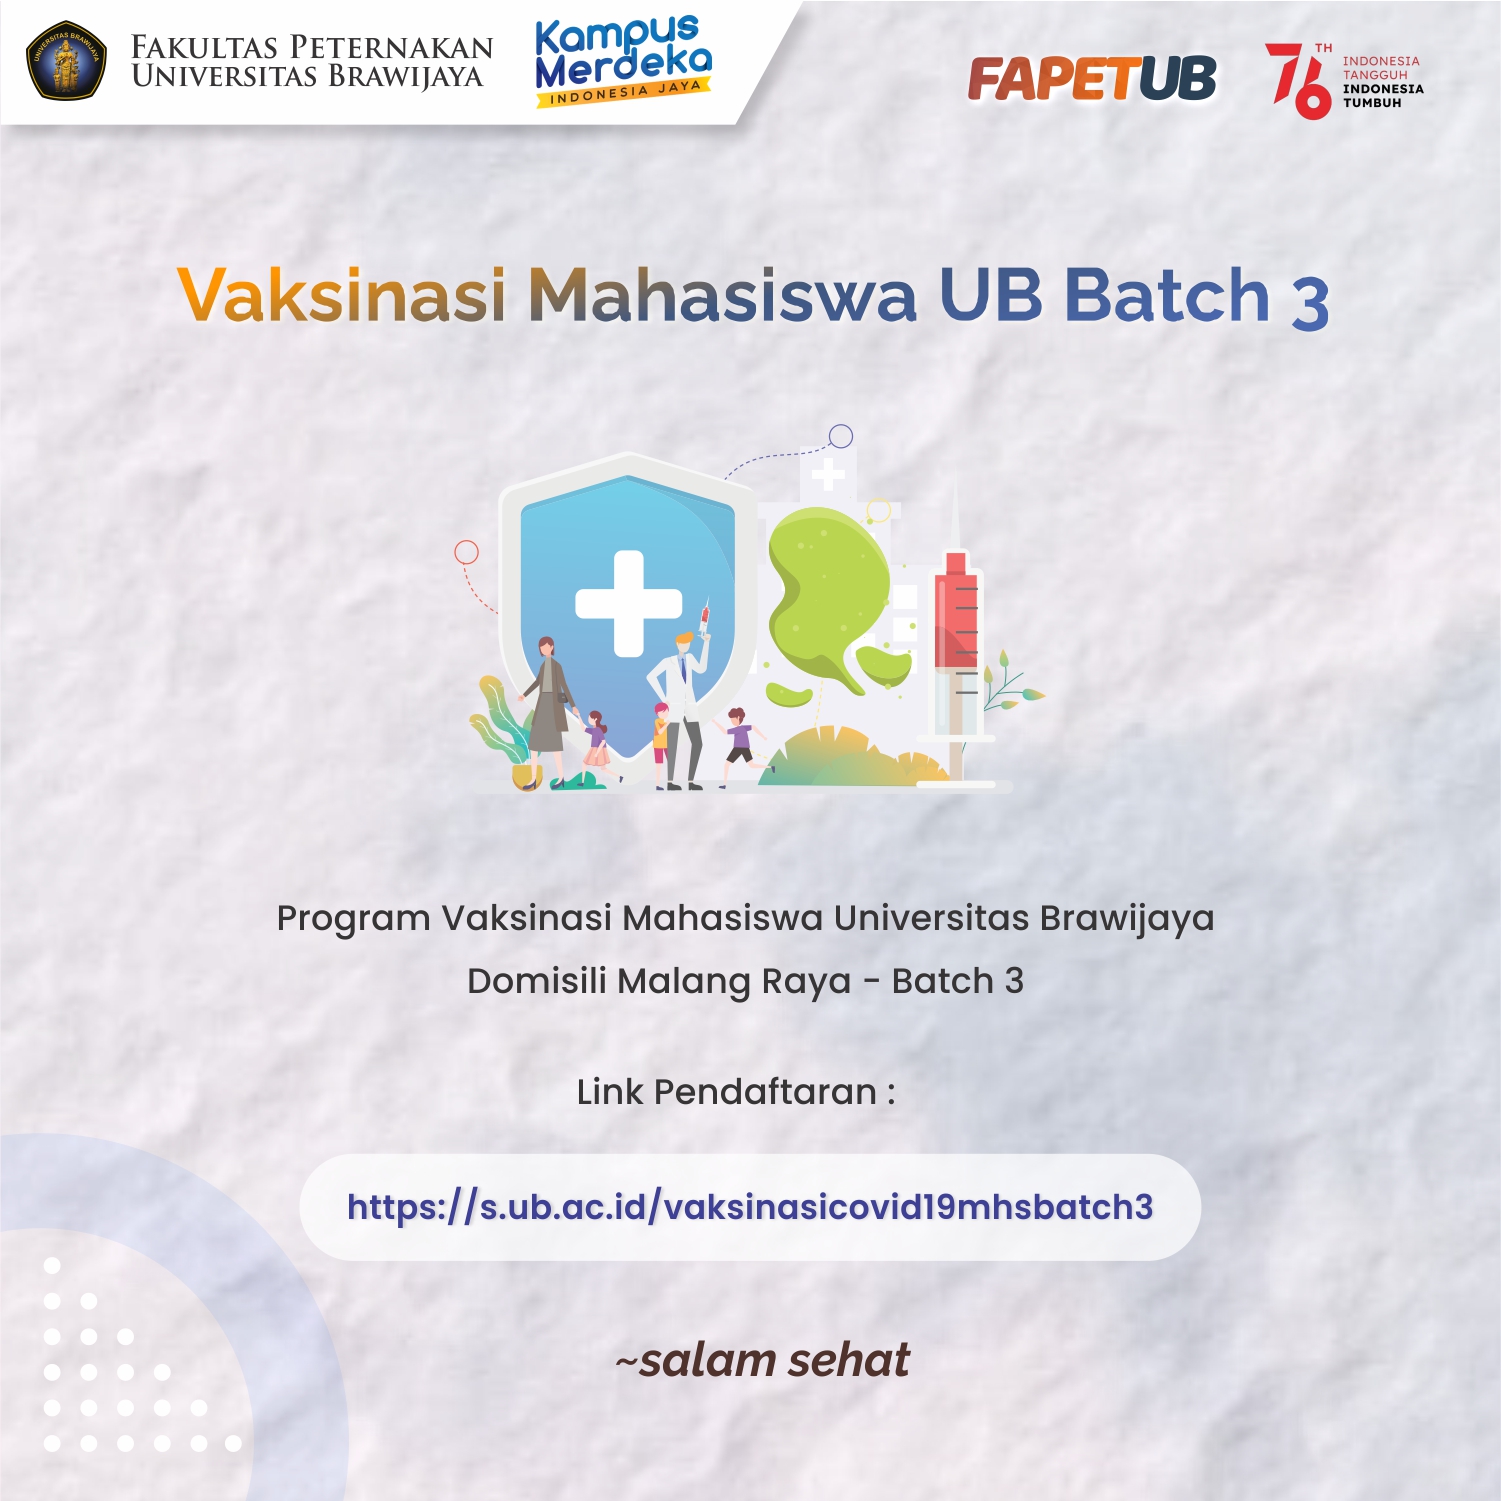 Program Vaksinasi Mahasiswa Universitas Brawijaya Batch 3